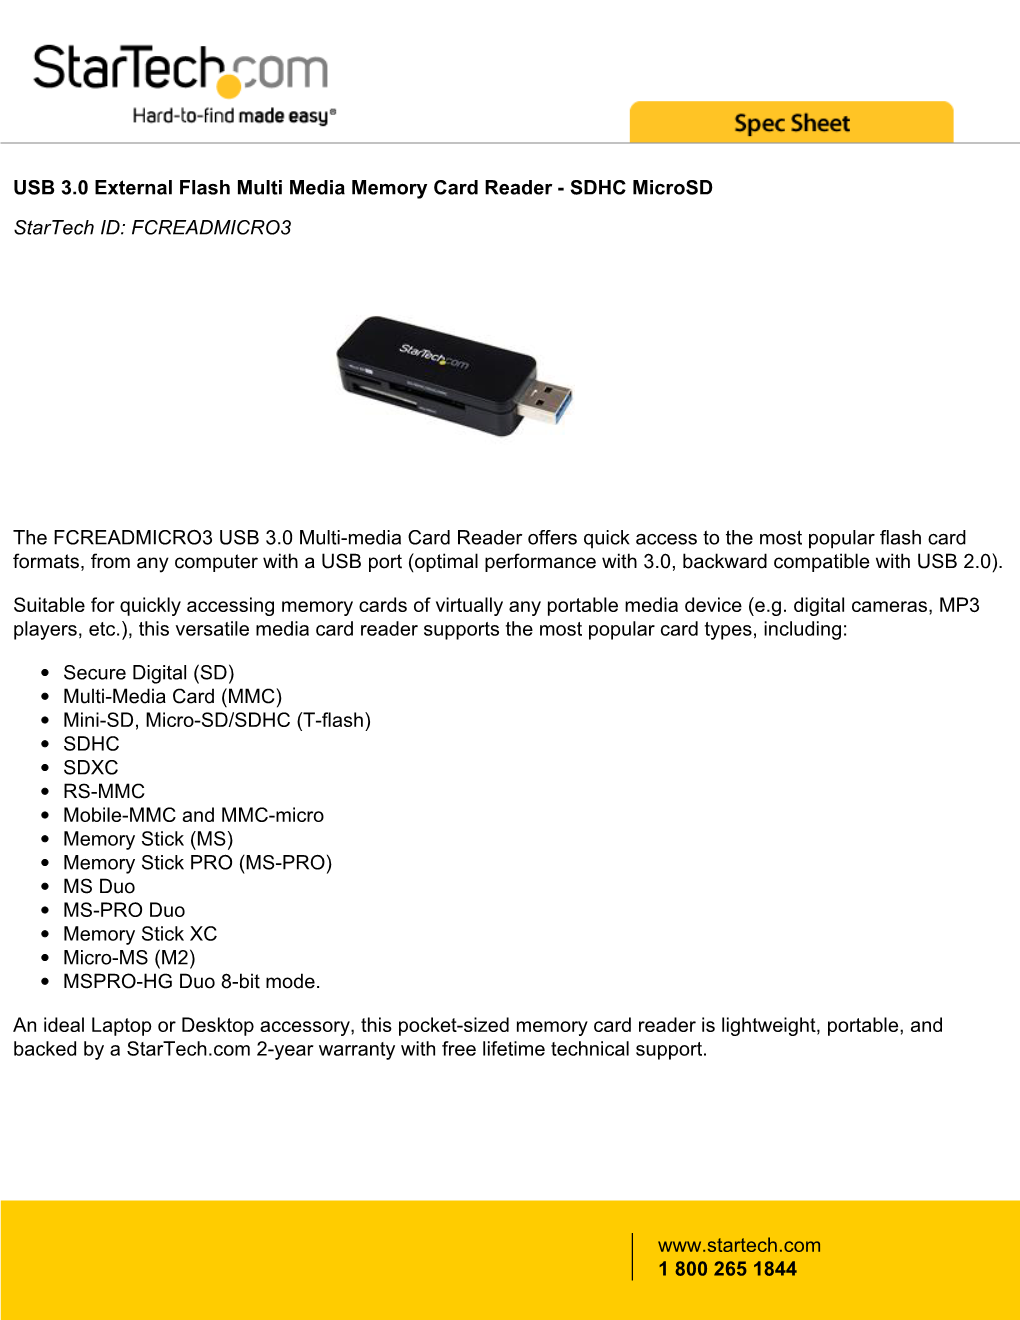 USB 3.0 External Flash Multi Media Memory Card Reader - SDHC Microsd Startech ID: FCREADMICRO3